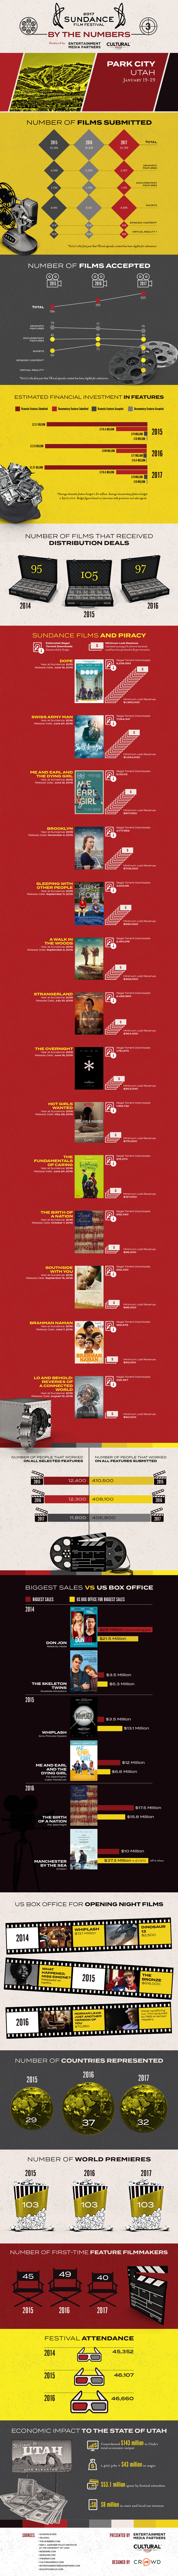 Sundance Infographic